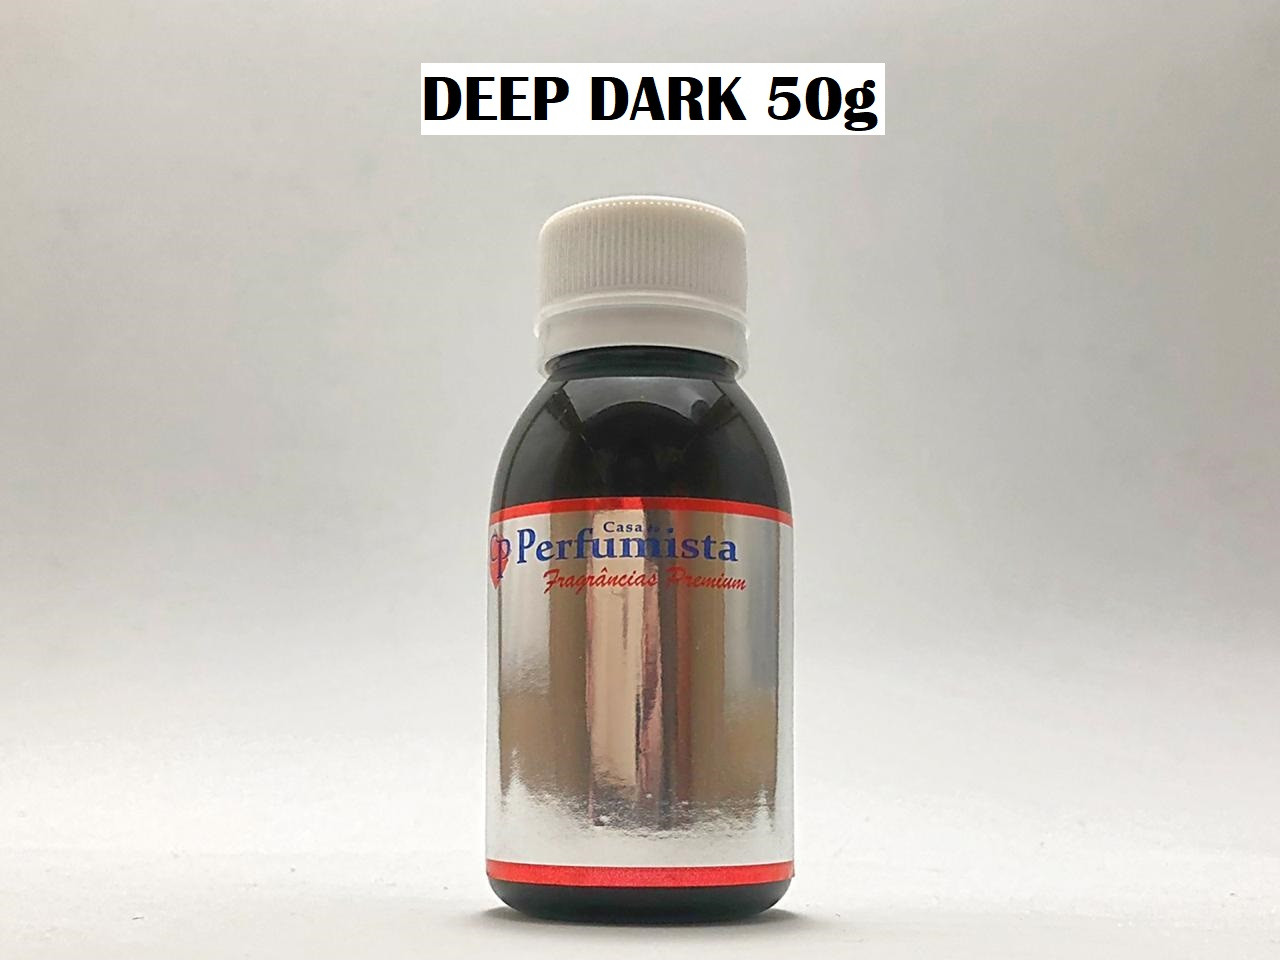 DEEP DARK 50g - Inspiração: Bleu Noir Masculino 